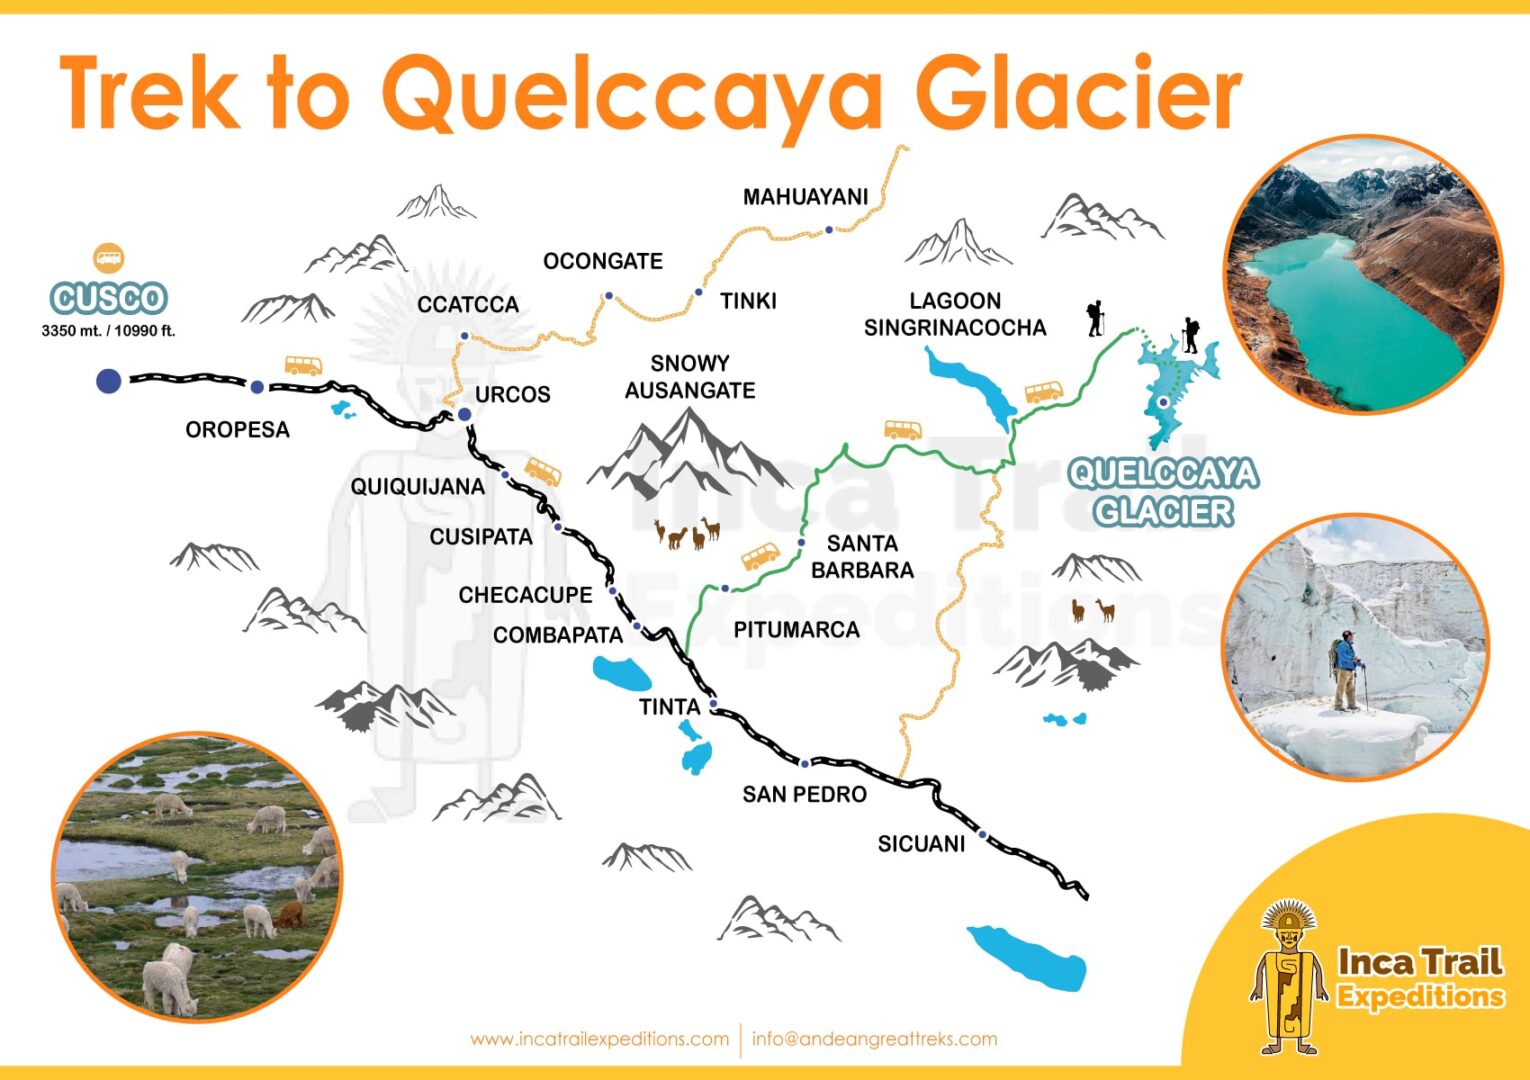 TREK-TO-QUELCCAYA-GLACIER-BY-INCA-TRAIL-EXPEDITIONS